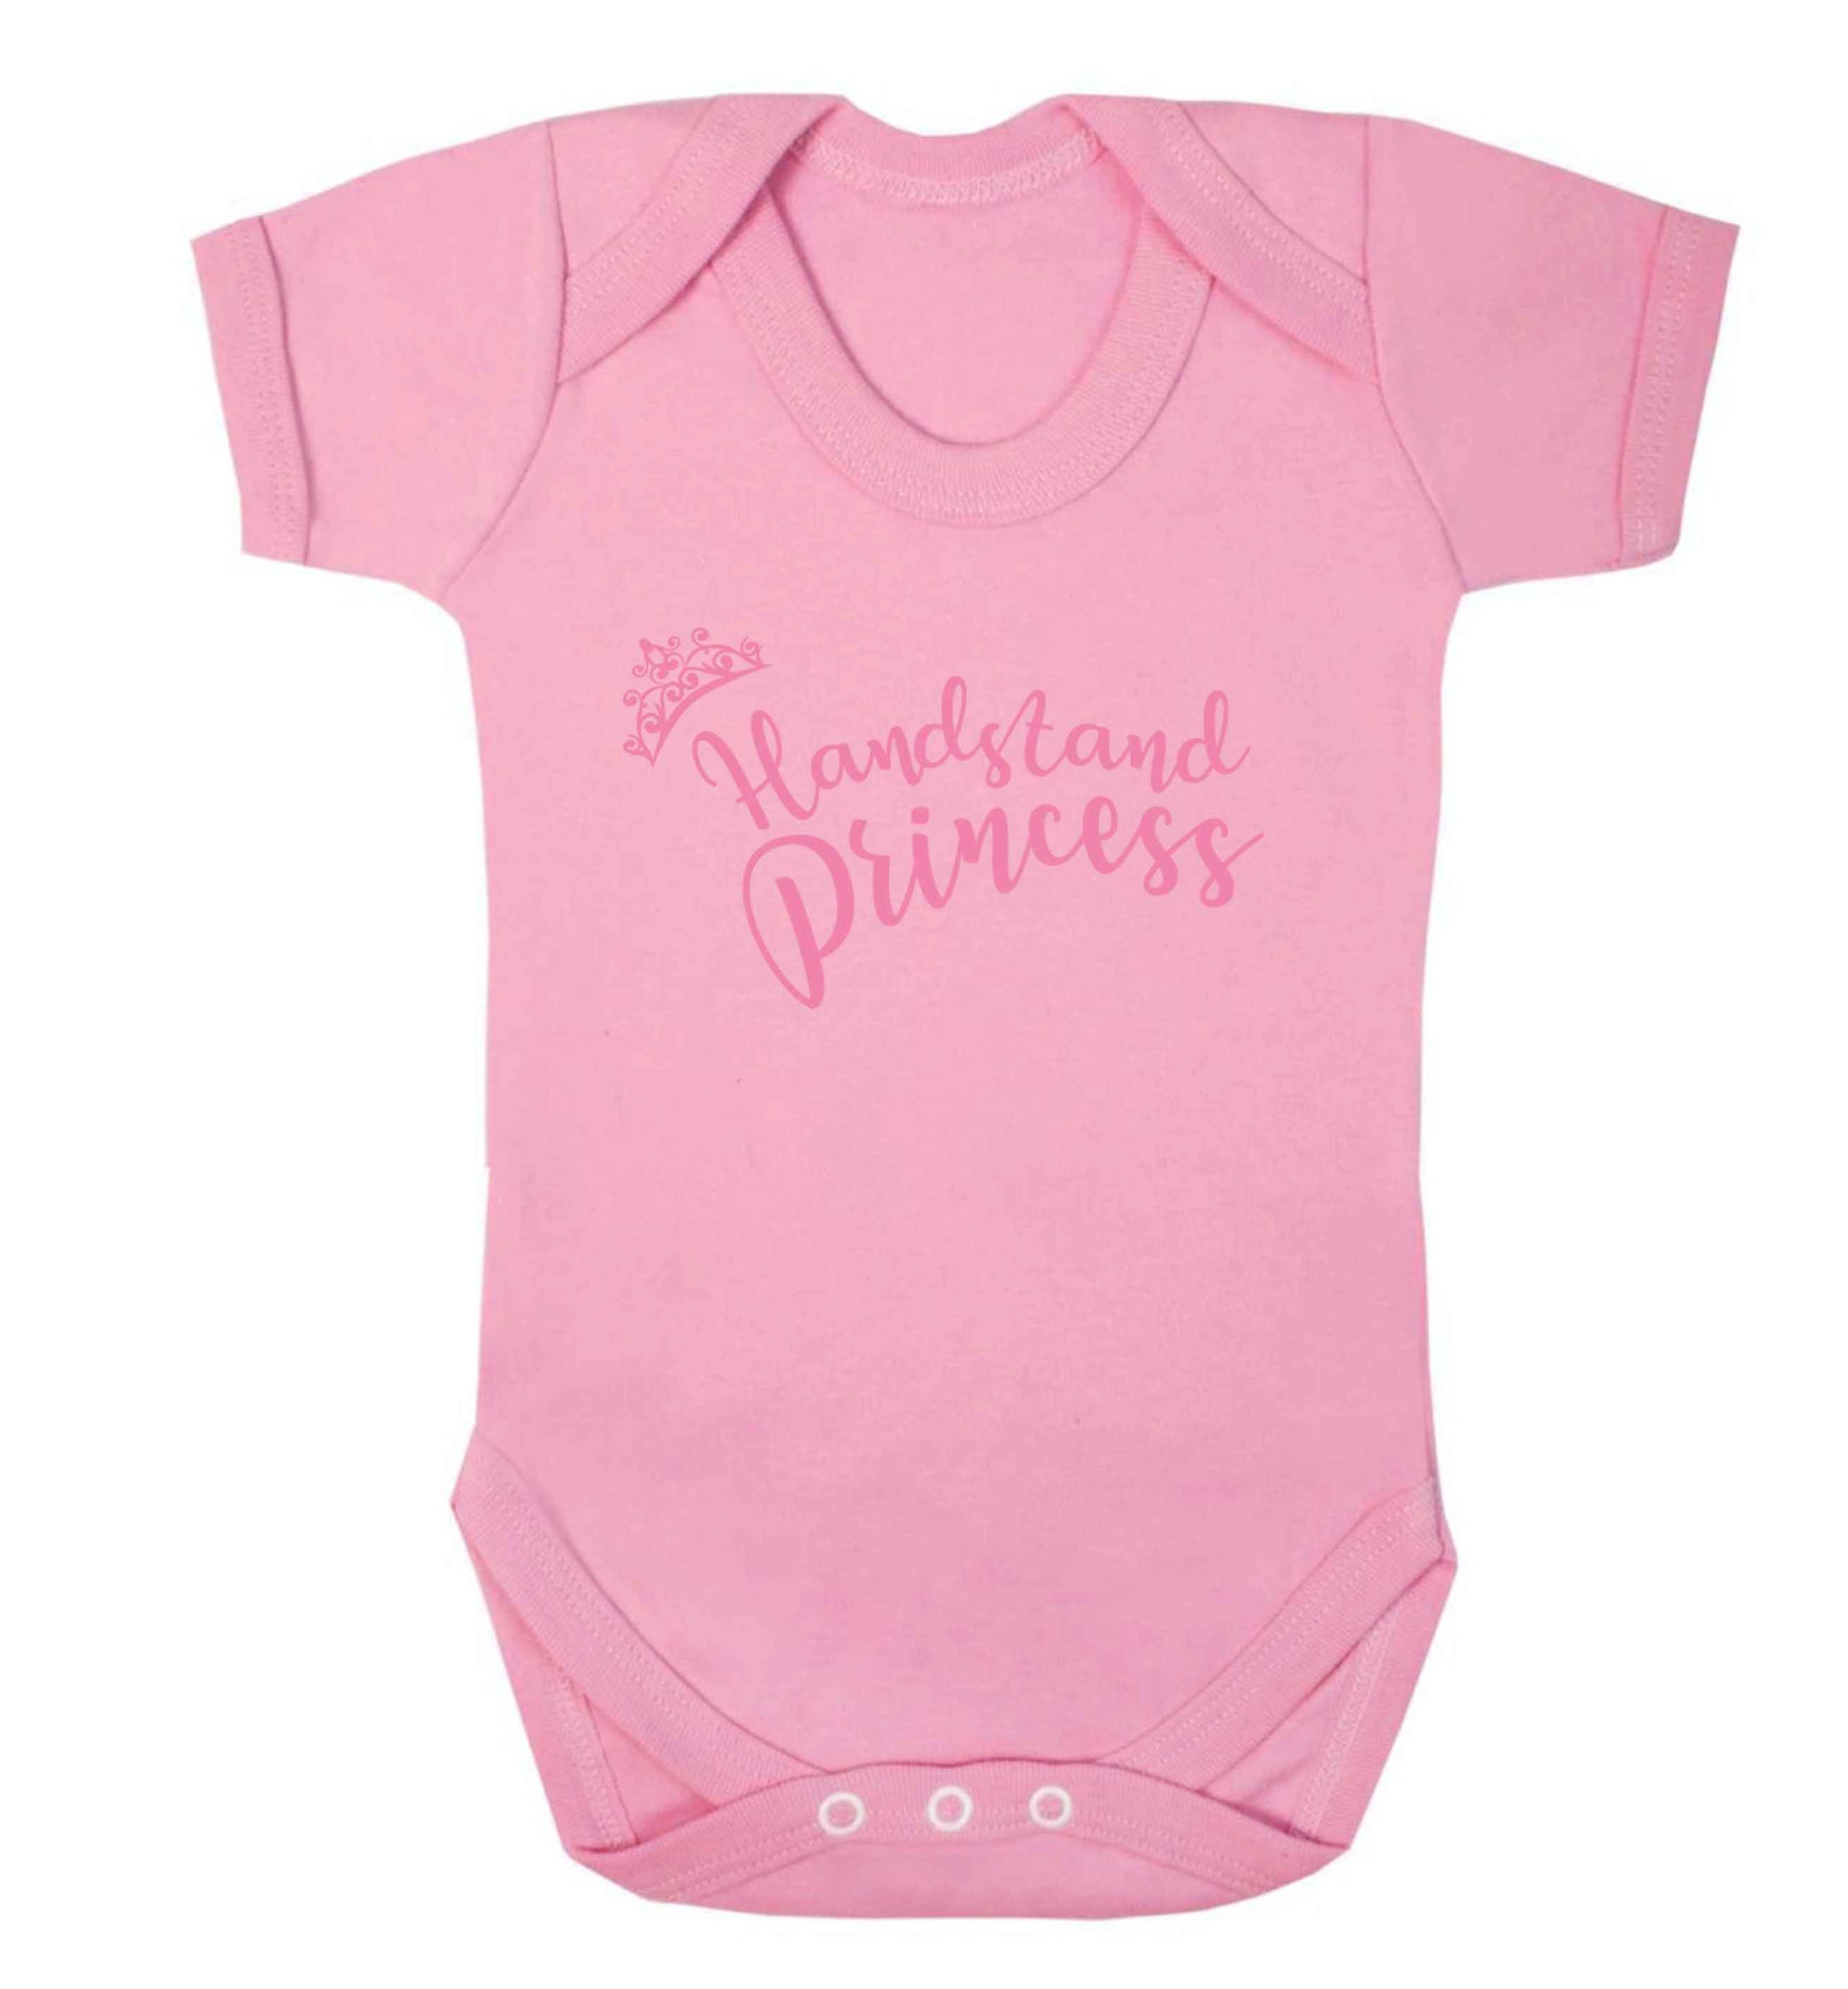 Handstand princess Baby Vest pale pink 18-24 months